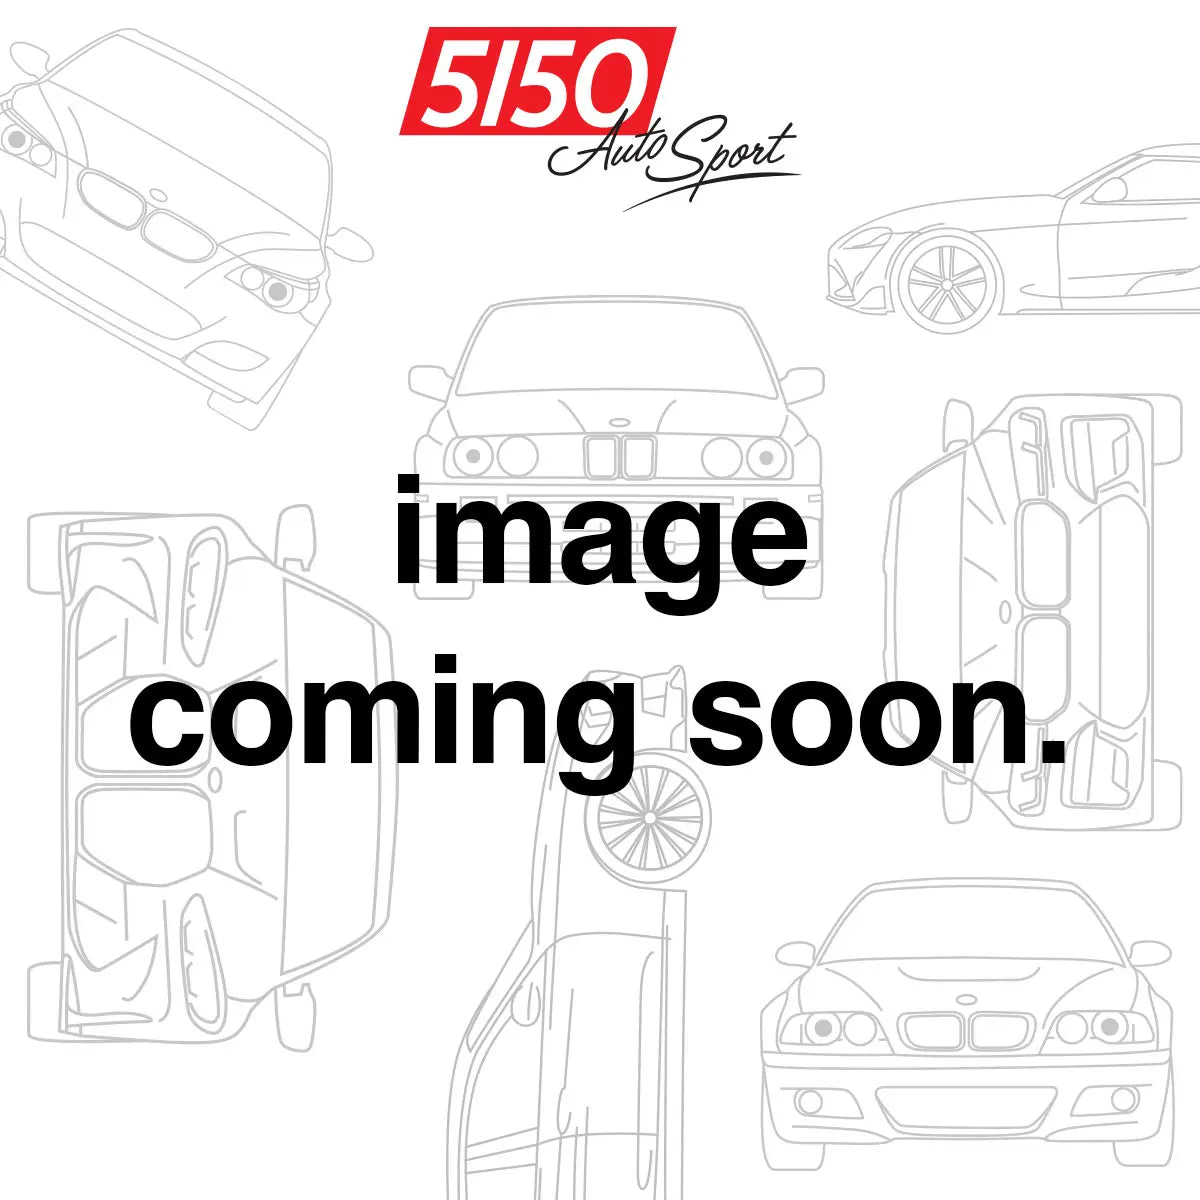 5150 AutoSport Cylinder Head O-Ringing Service, 6-Cylinder BMW Engines